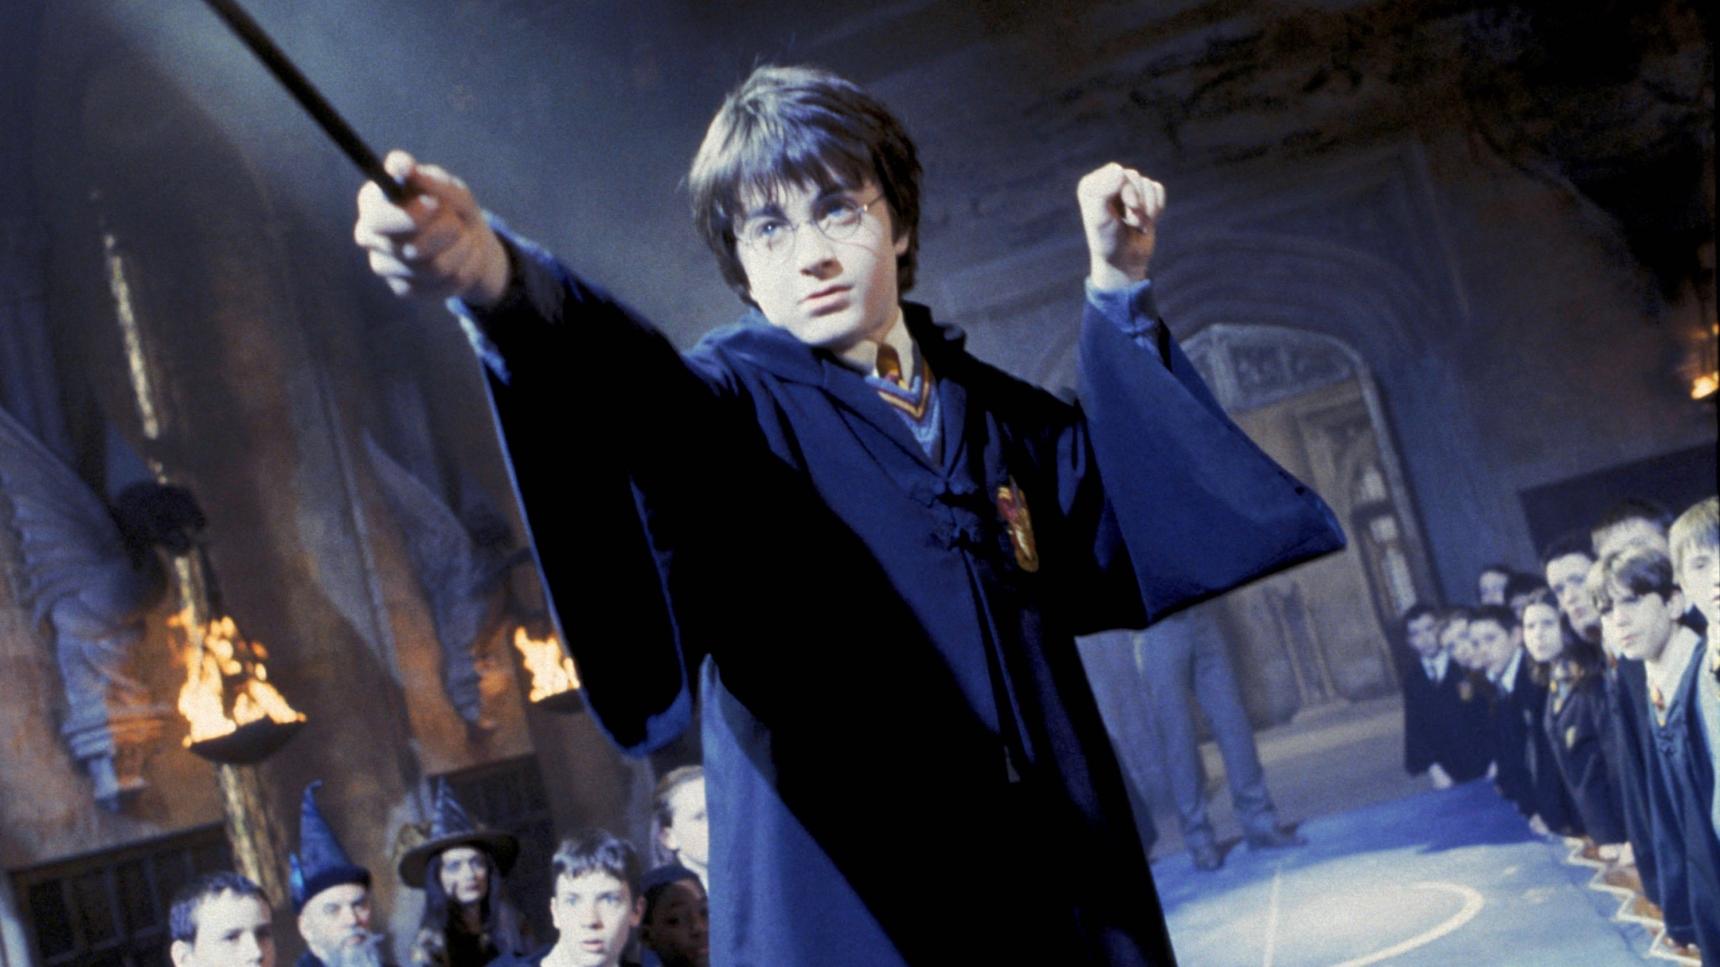 Fondo de pantalla de la película Harry Potter y la cámara secreta en PELISPEDIA gratis